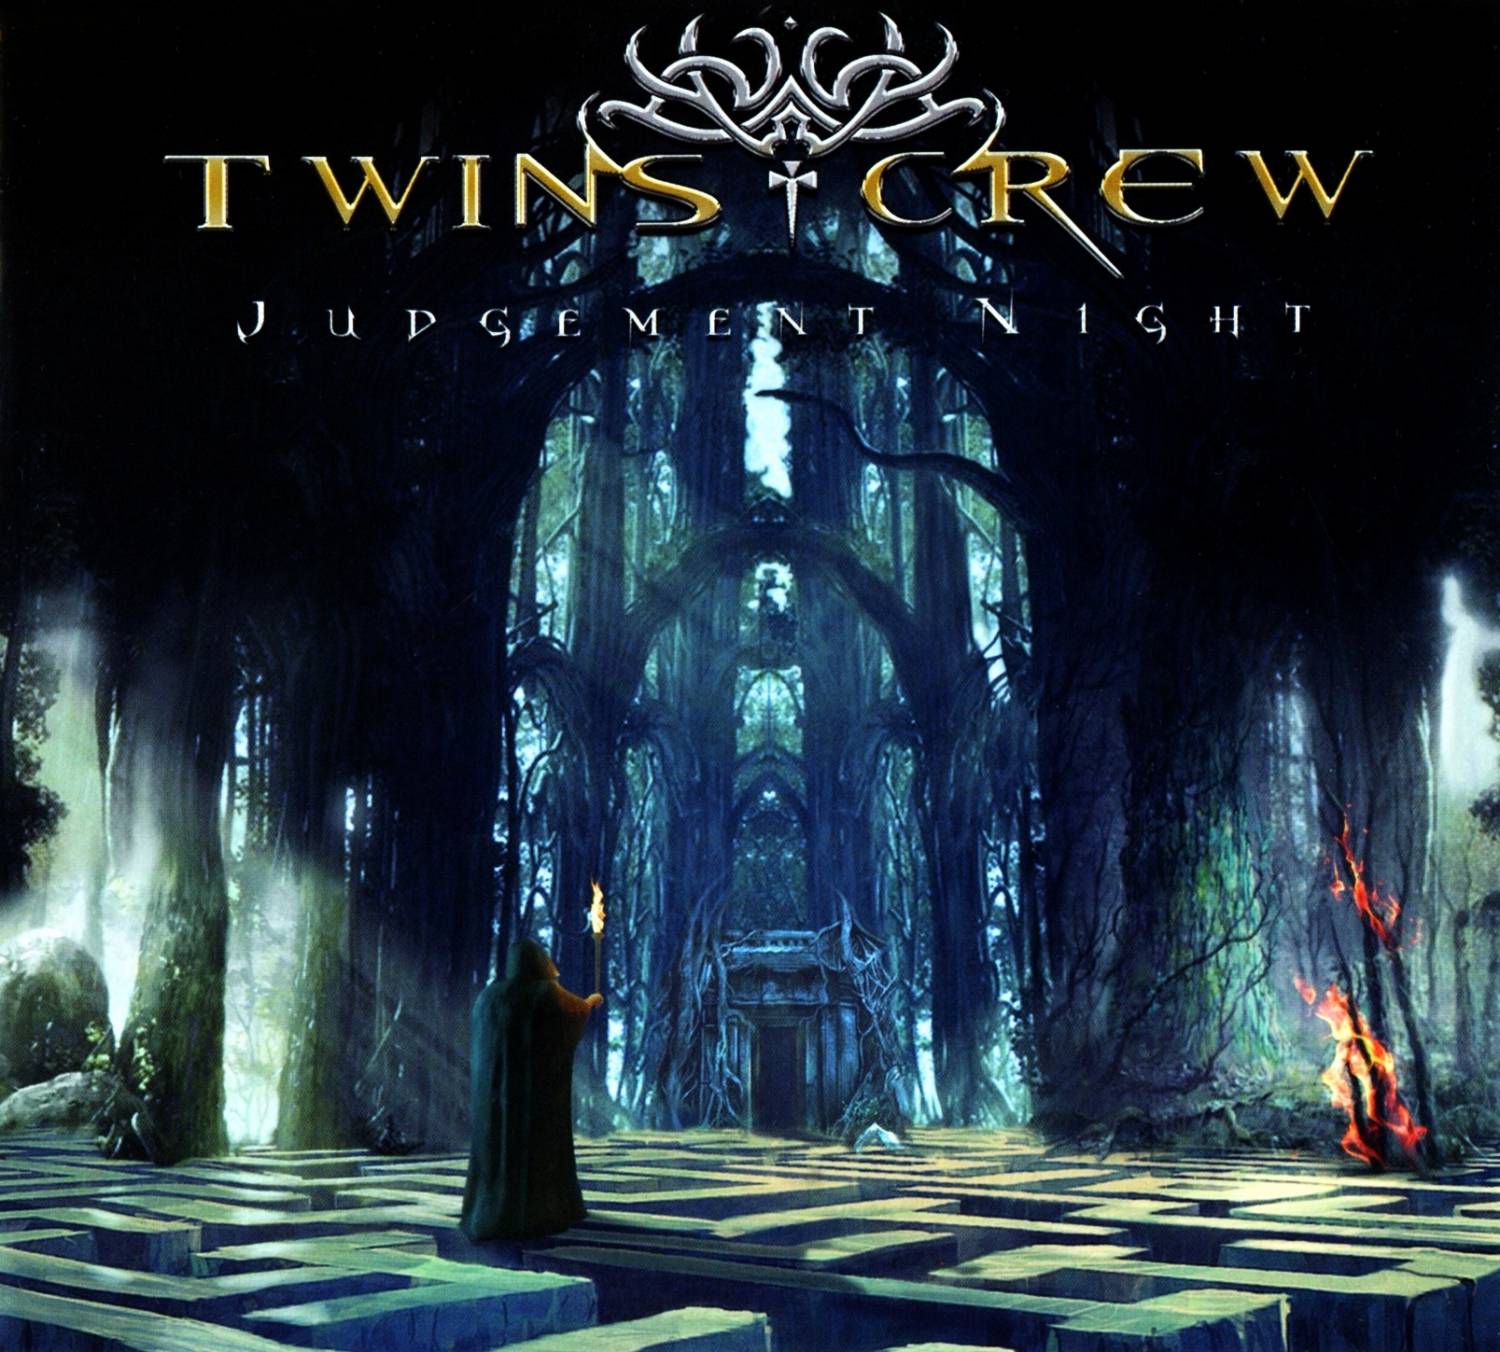  Twins Crew - Judgement Night (2011)